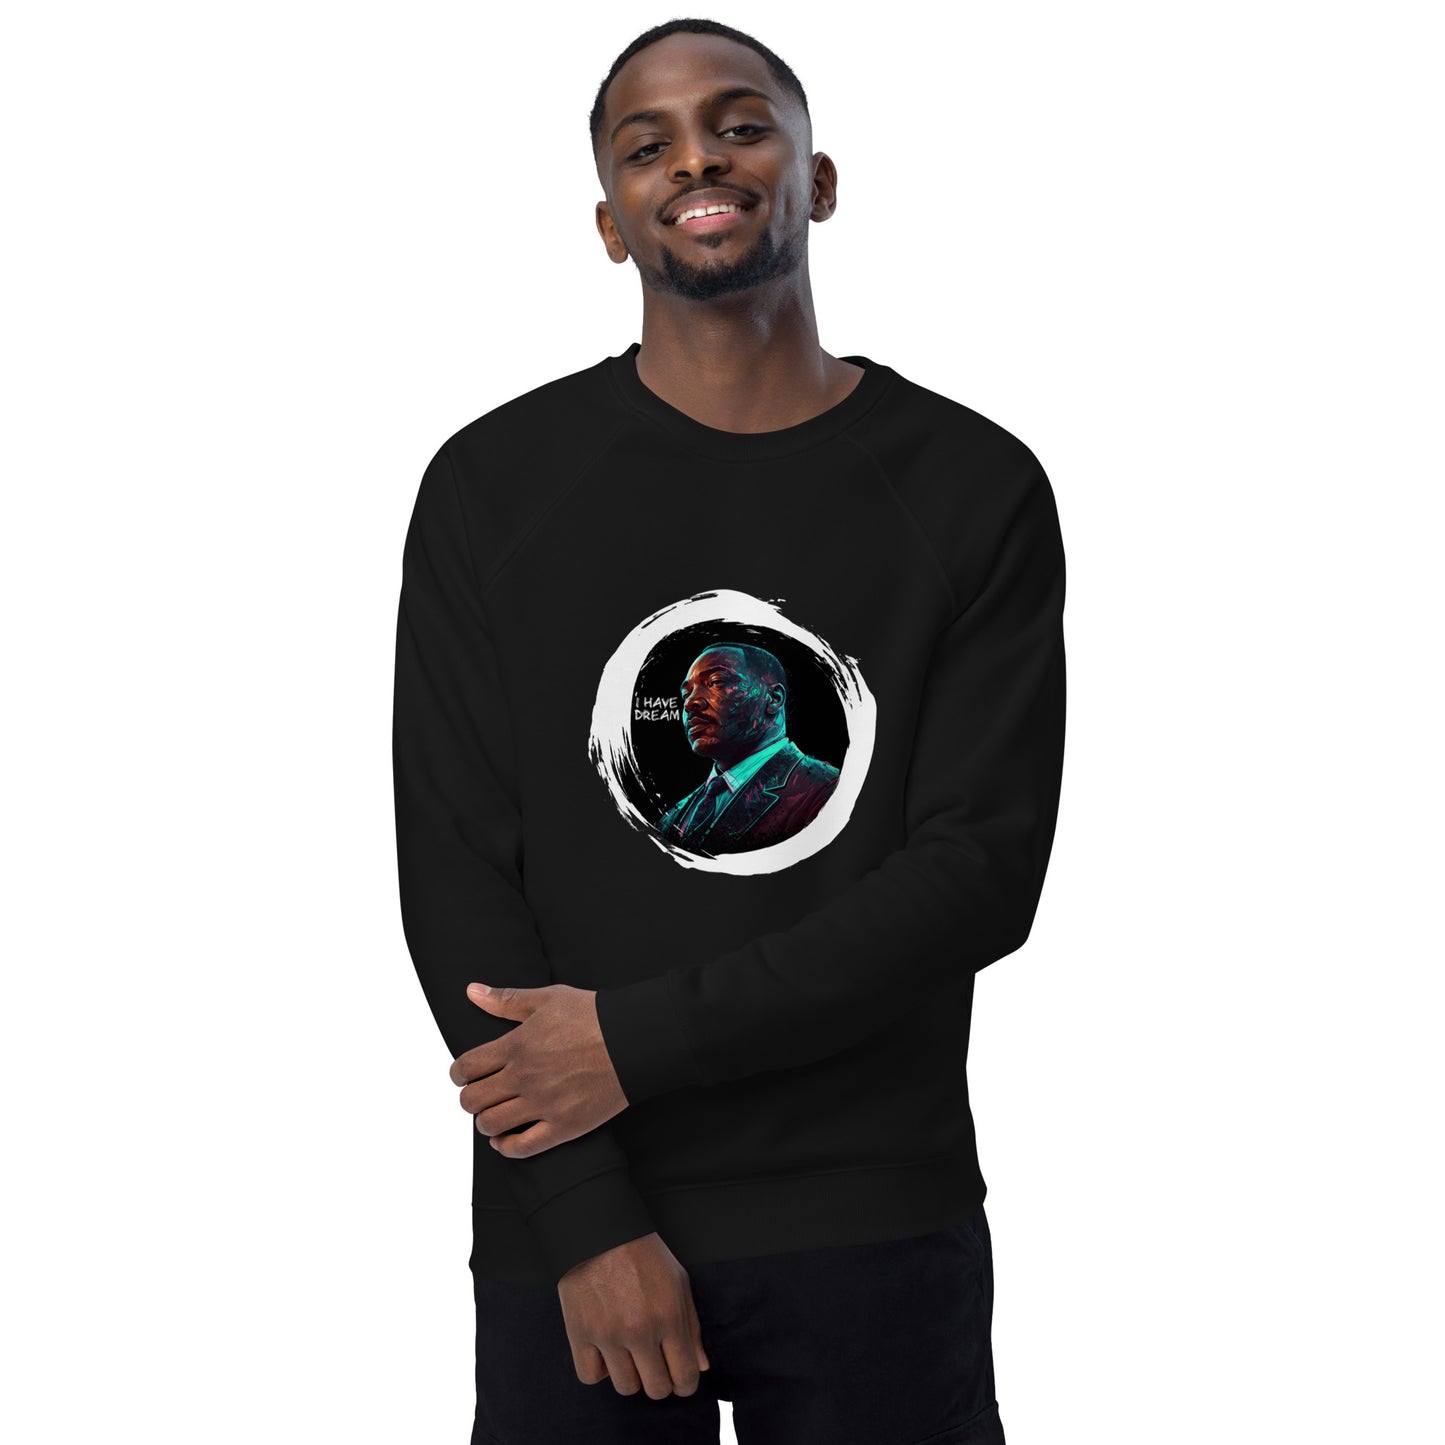 I have a dream - Unisex organic raglan sweatshirt